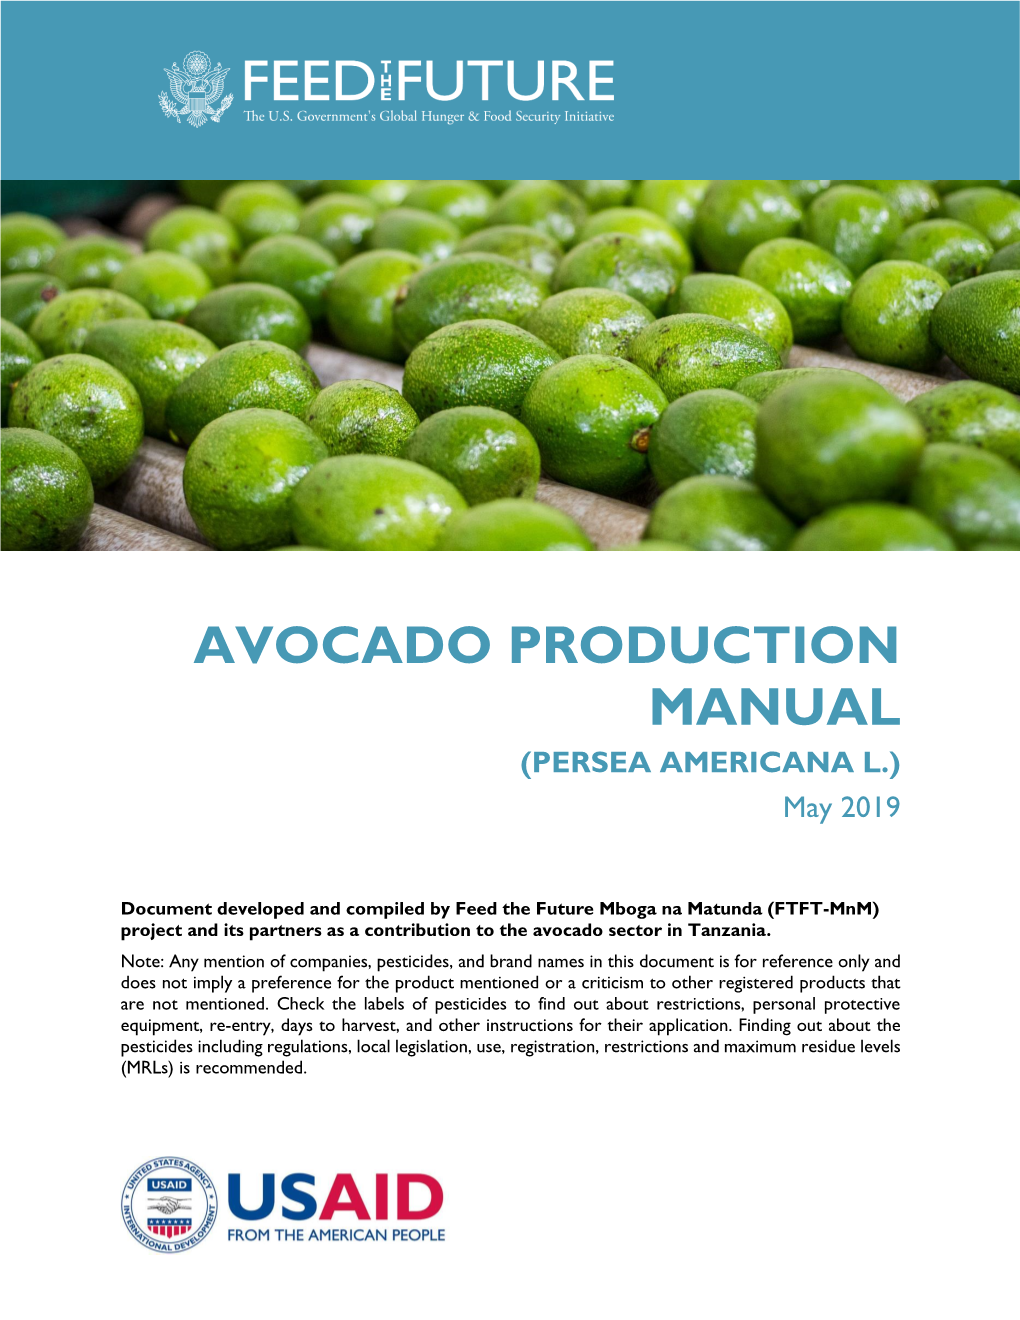 AVOCADO PRODUCTION MANUAL (PERSEA AMERICANA L.) May 2019